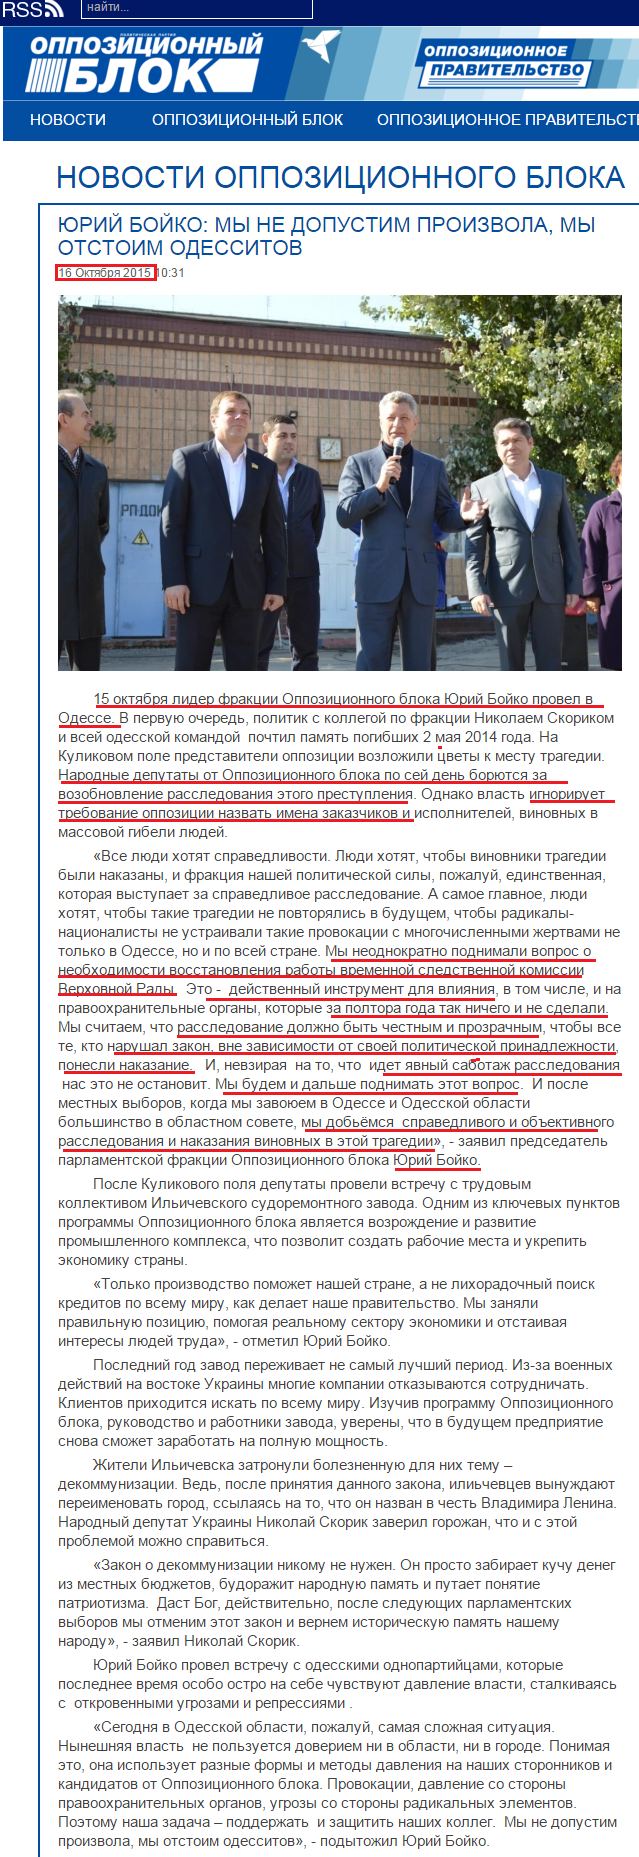 http://opposition.org.ua/news/yurij-bojko-mi-ne-dopustimo-svavillya-mi-vidstomo-odesitiv.html